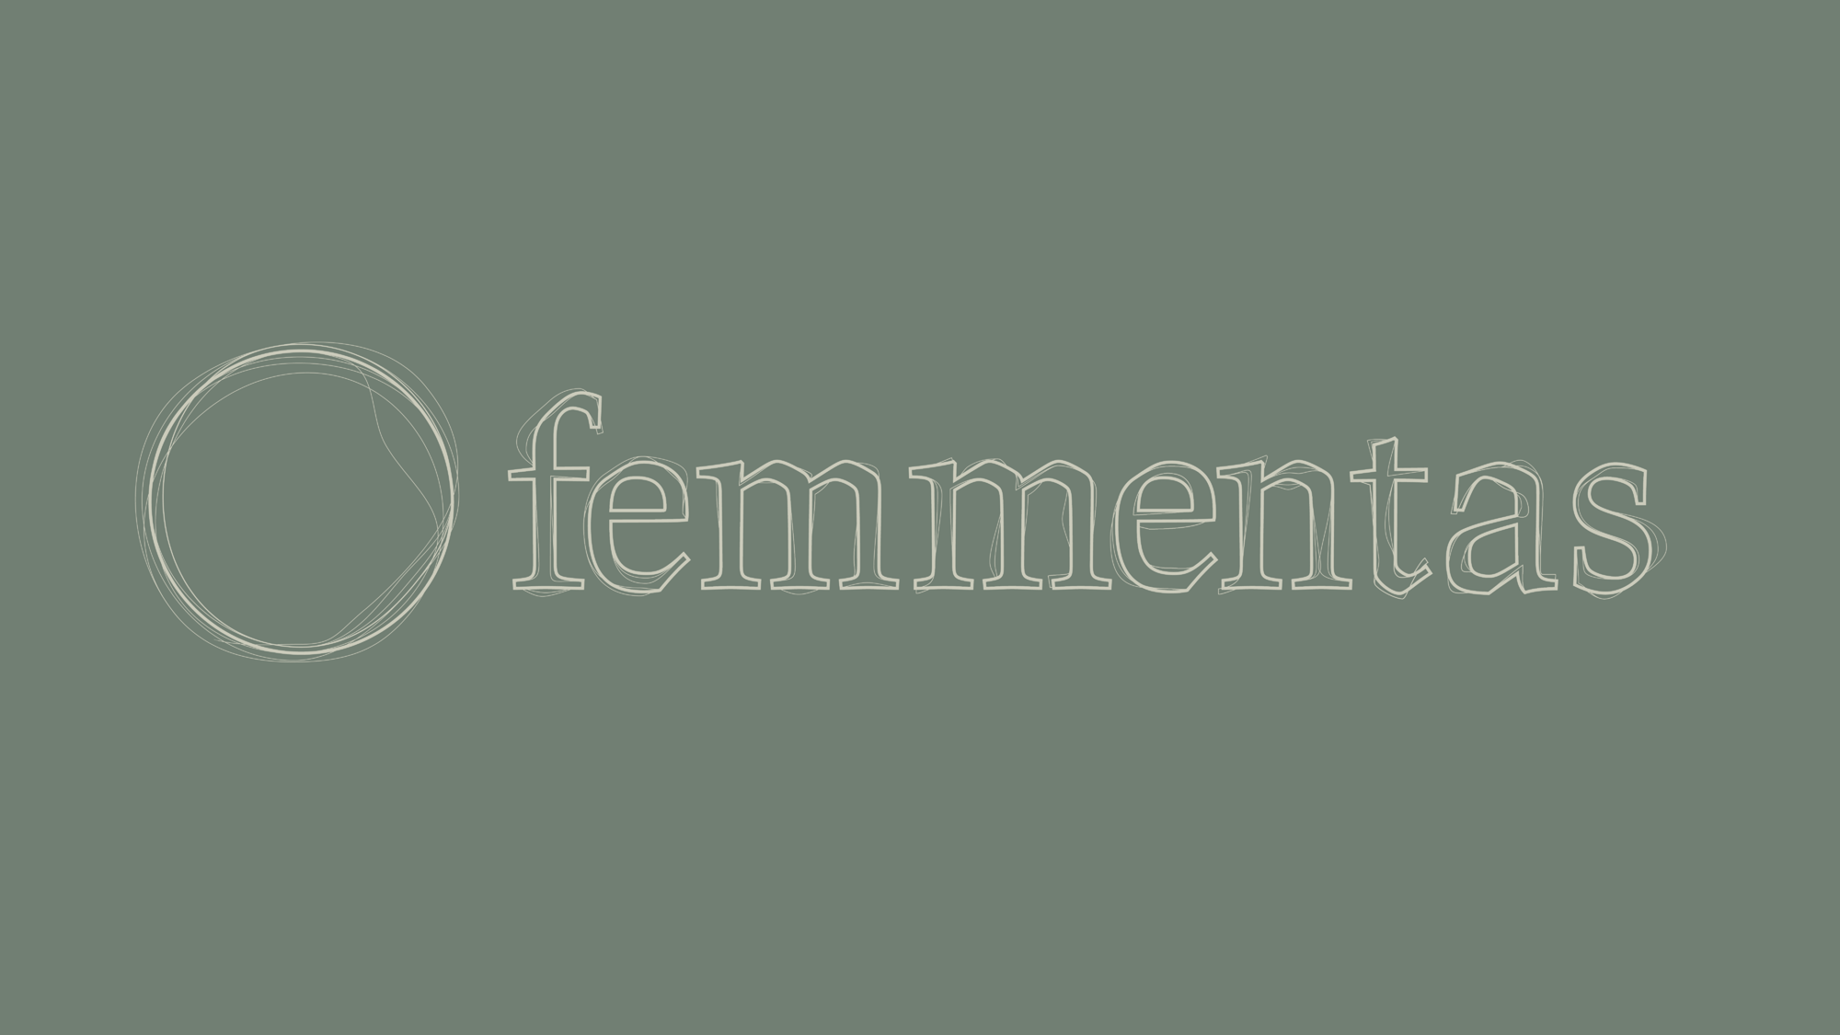 Logodesign femmentas